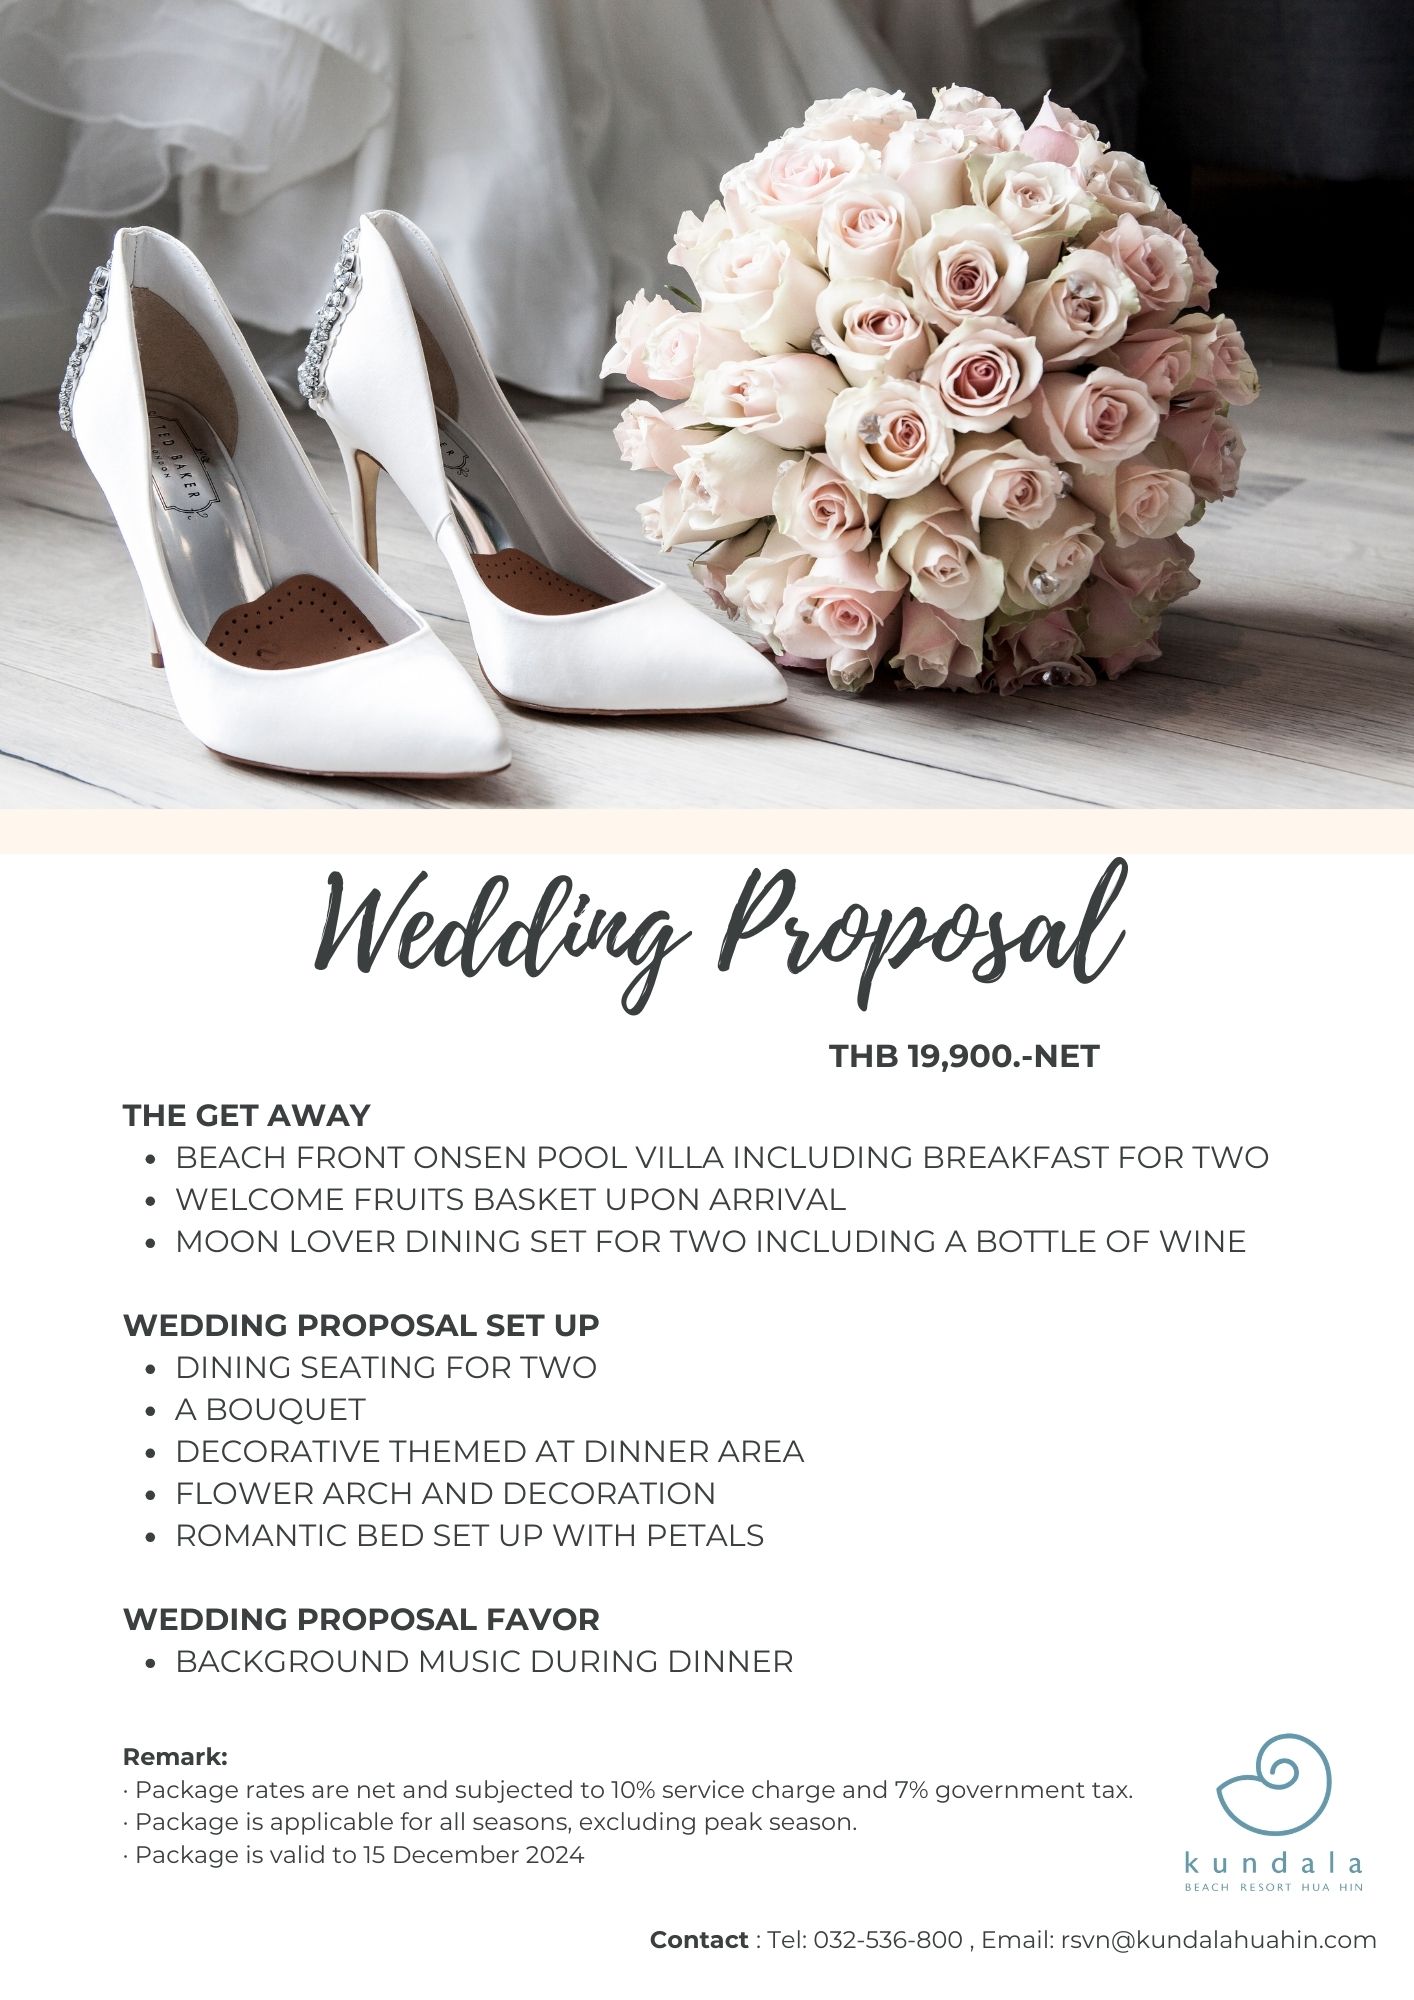 Wedding proposal package